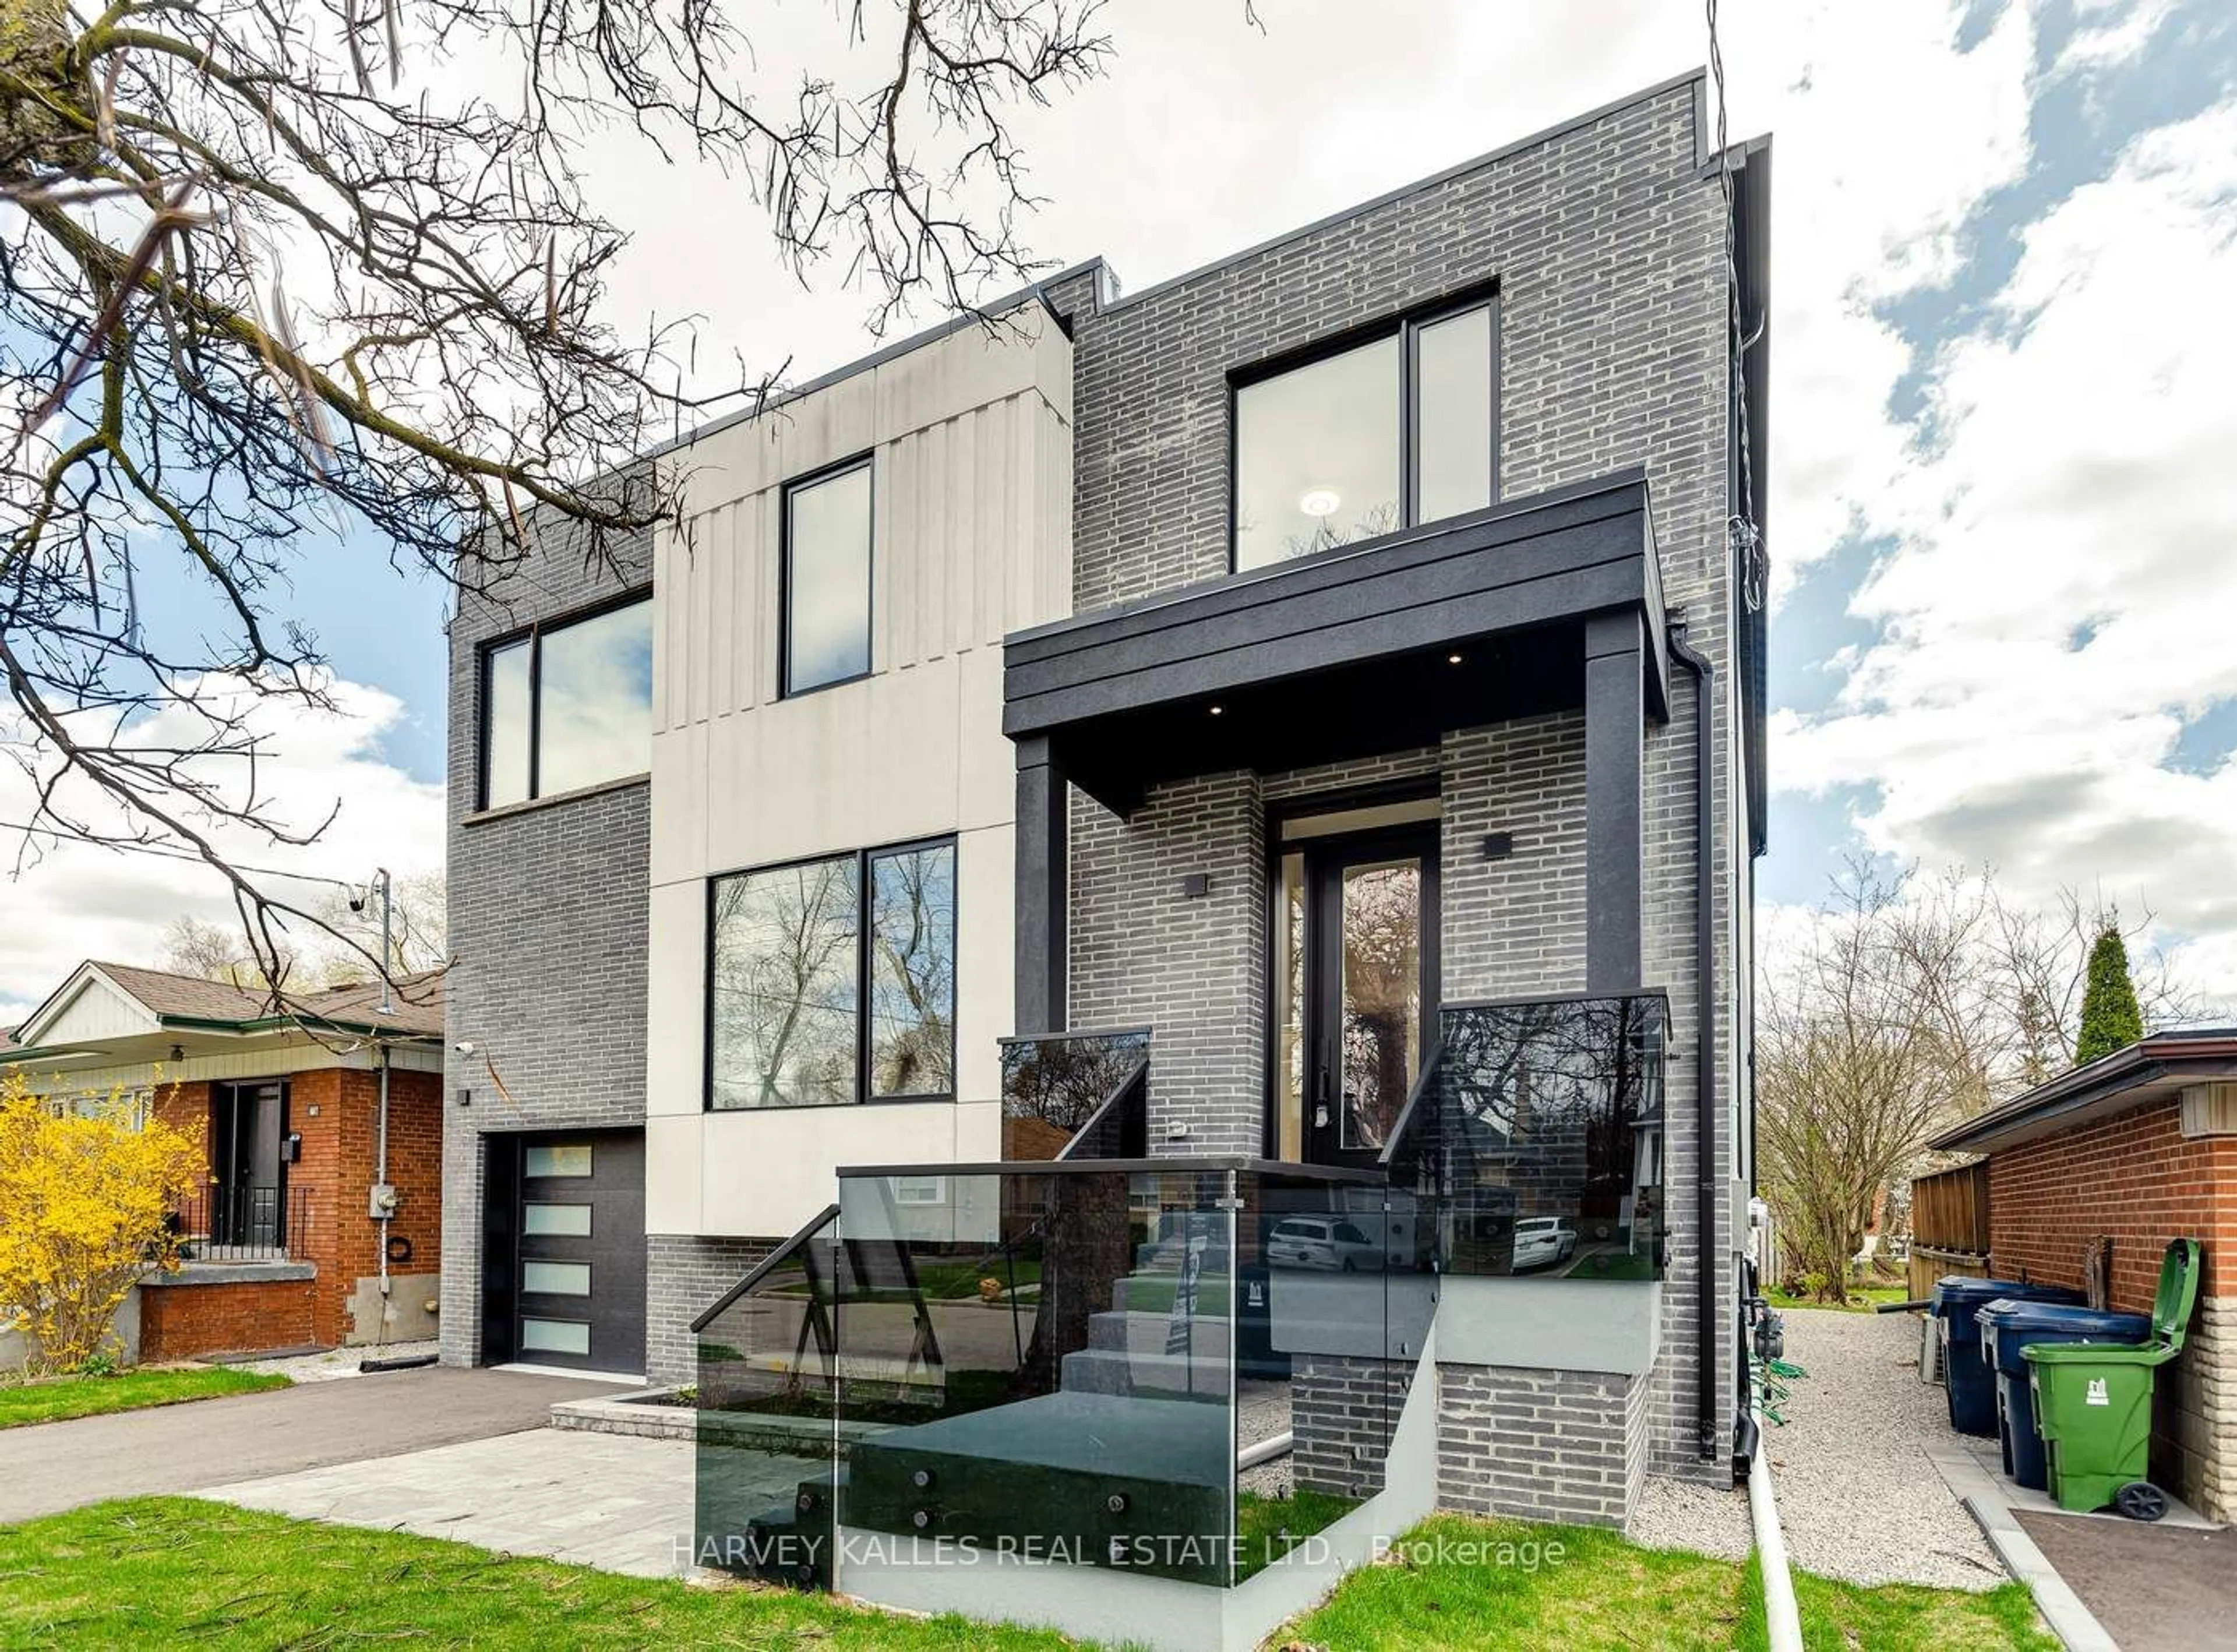 Home with brick exterior material for 81 De Quincy Blvd, Toronto Ontario M3H 1Y8